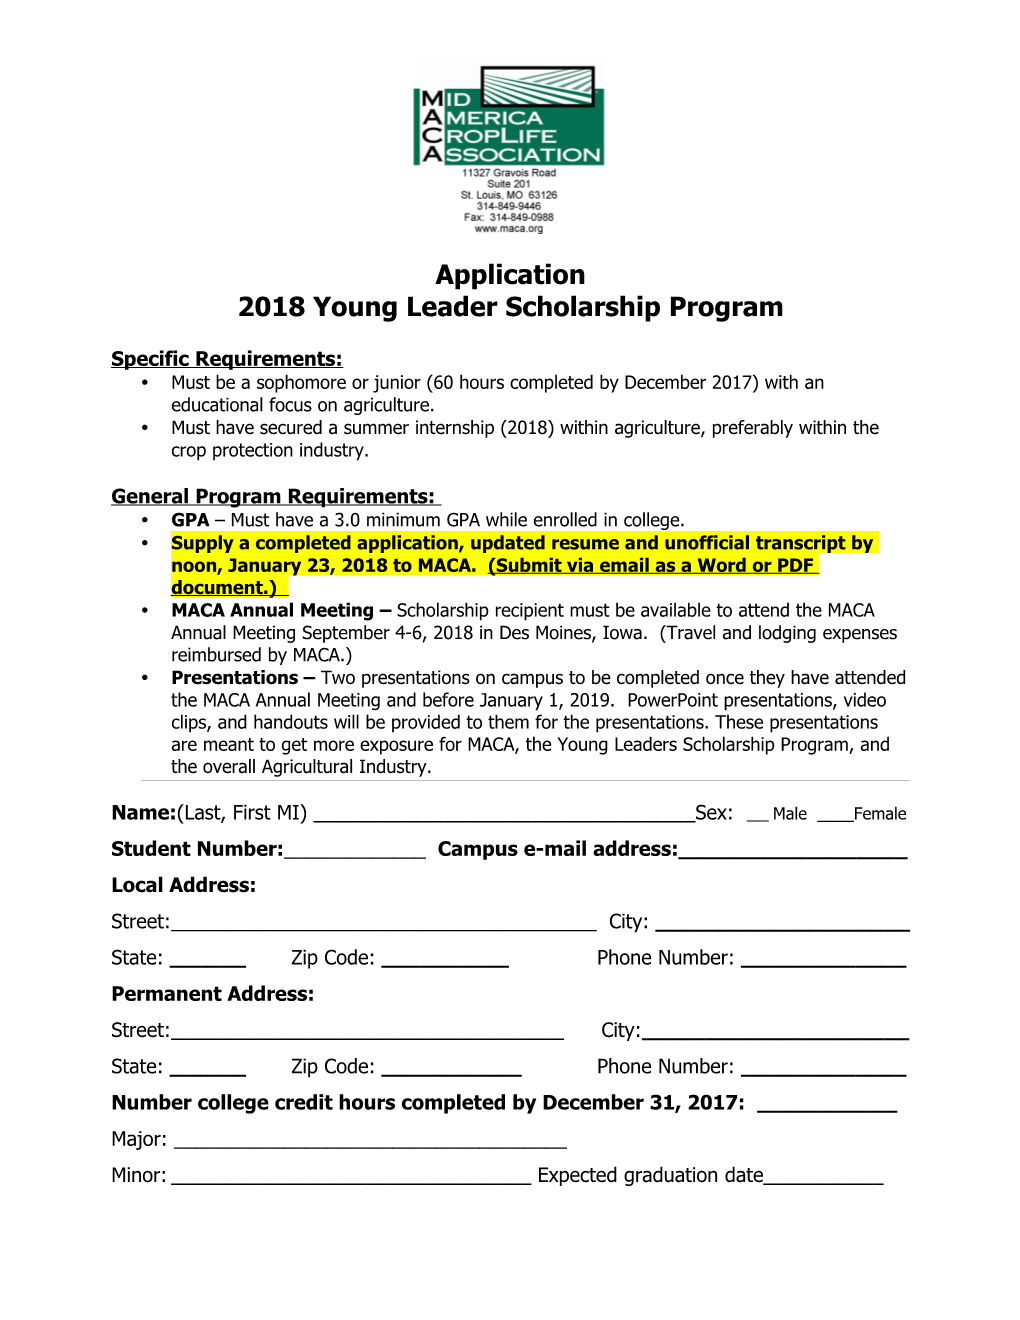 2018 Young Leader Scholarshipprogram